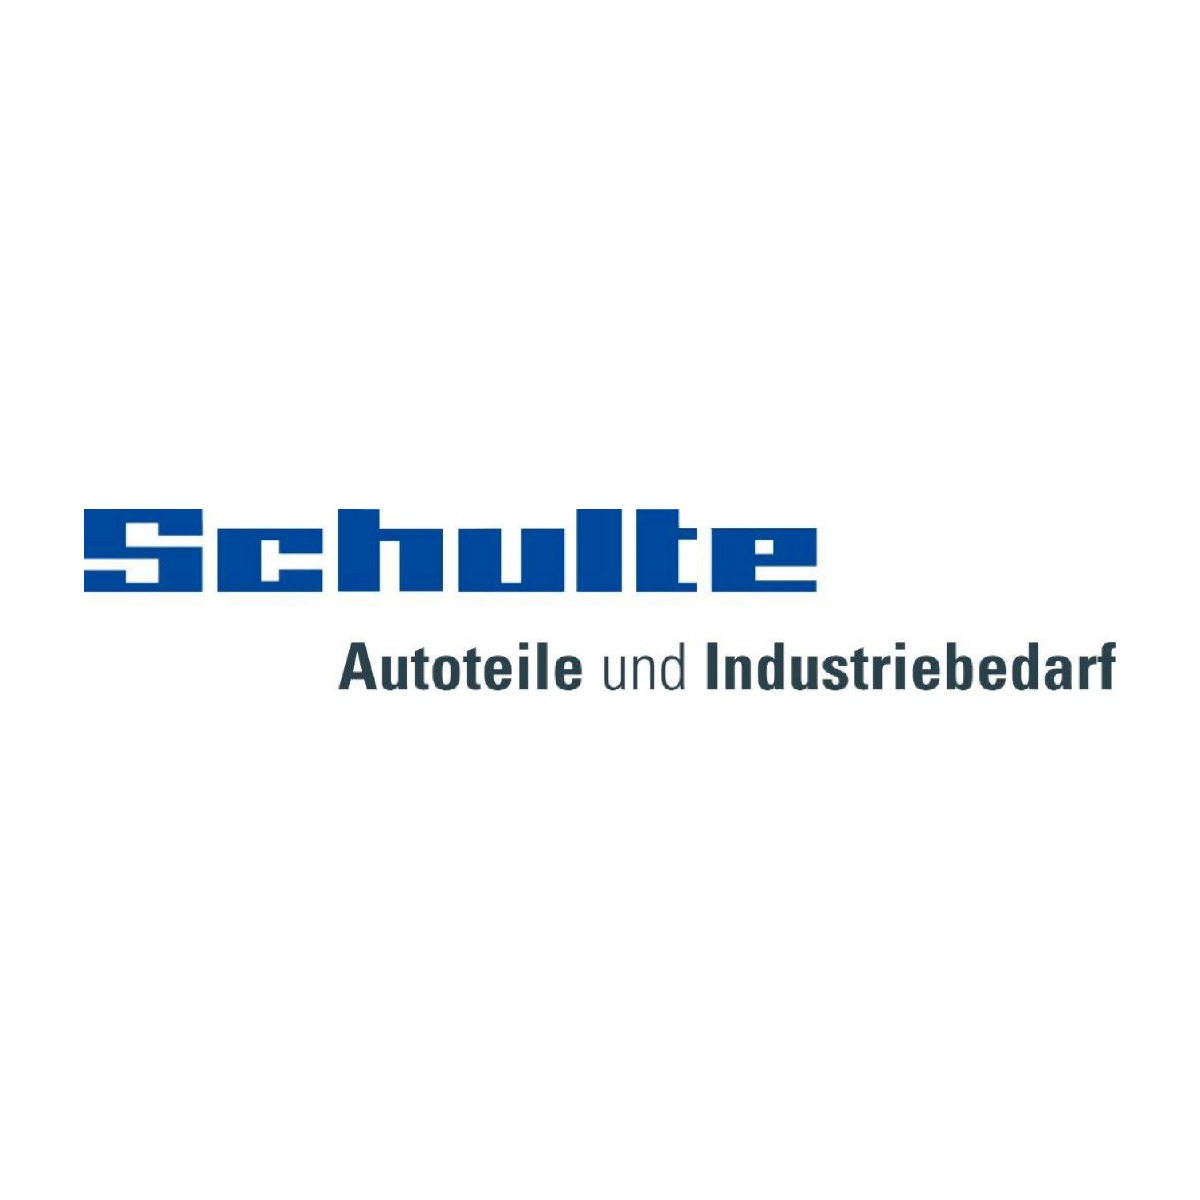 Hermann Schulte GmbH & Co. KG